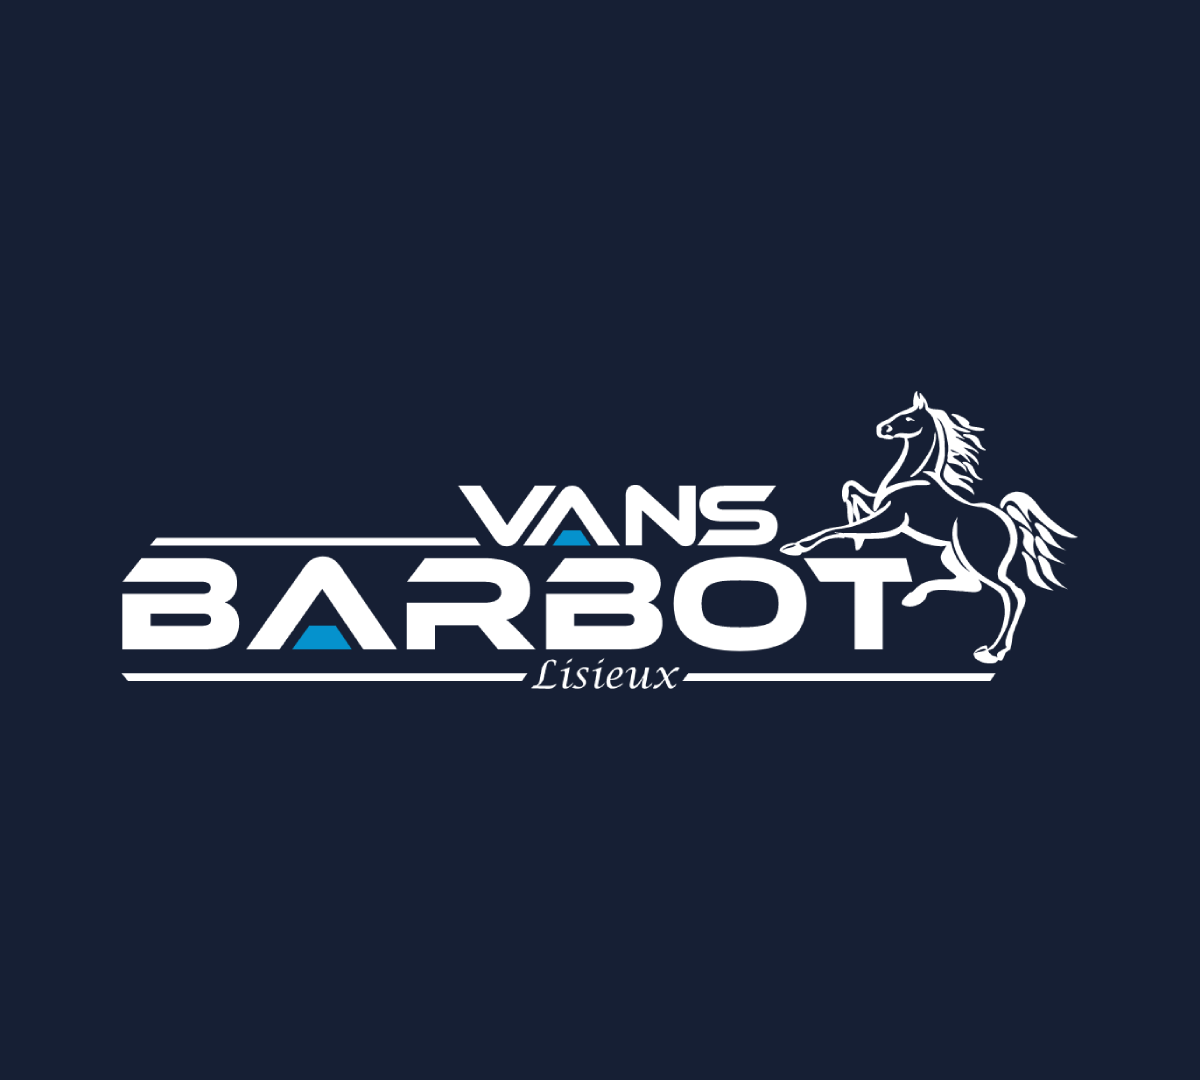 (c) Vans-barbot.com